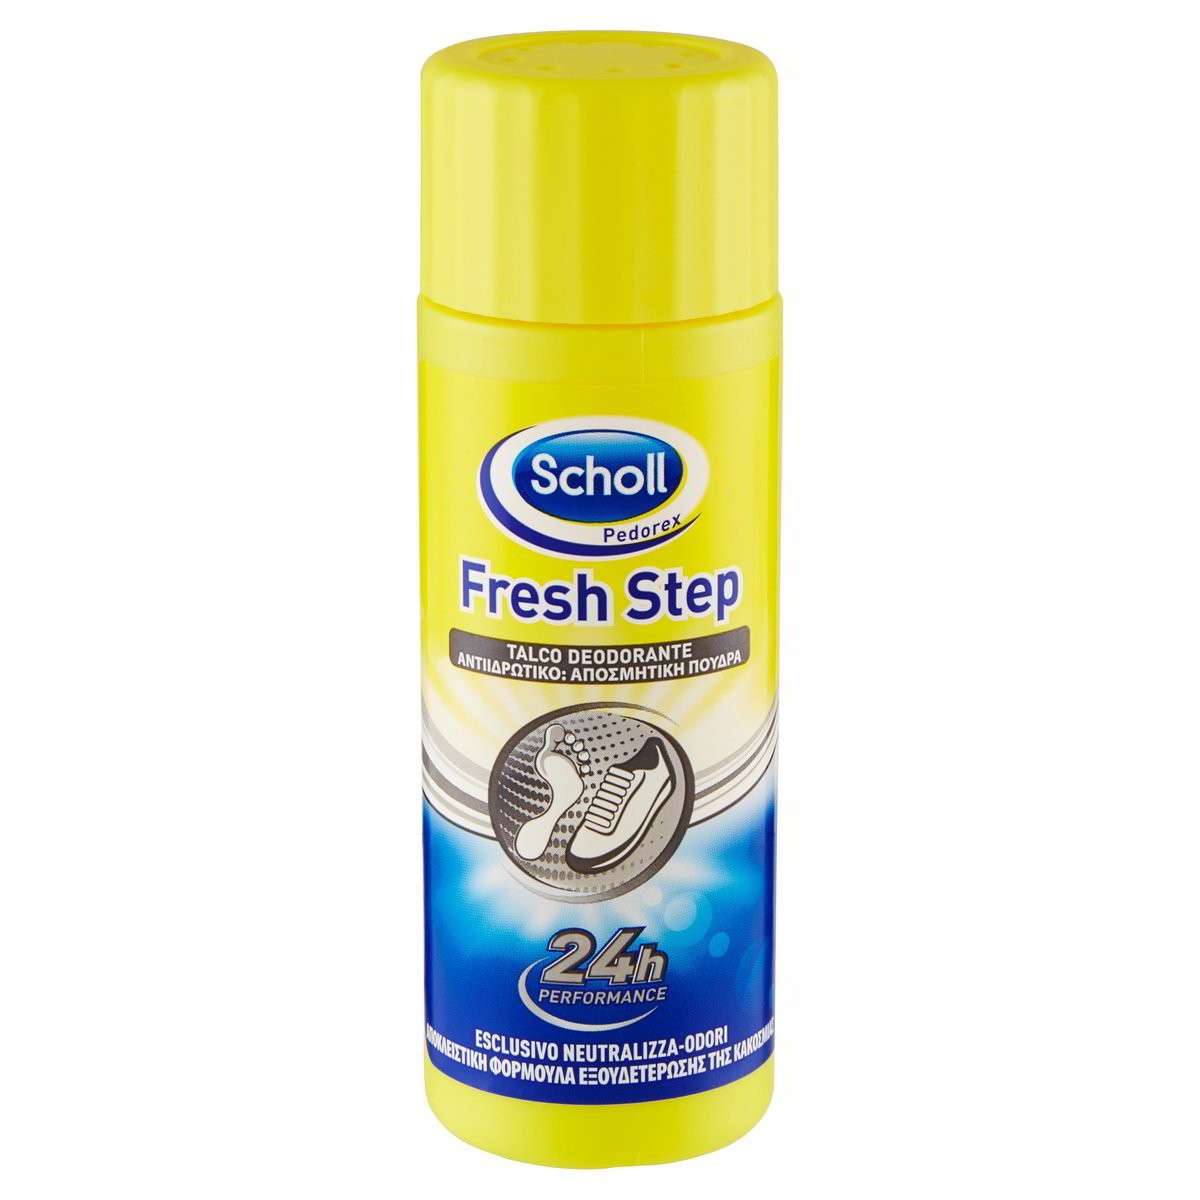 Scholl Talco deodorante Fresh Step